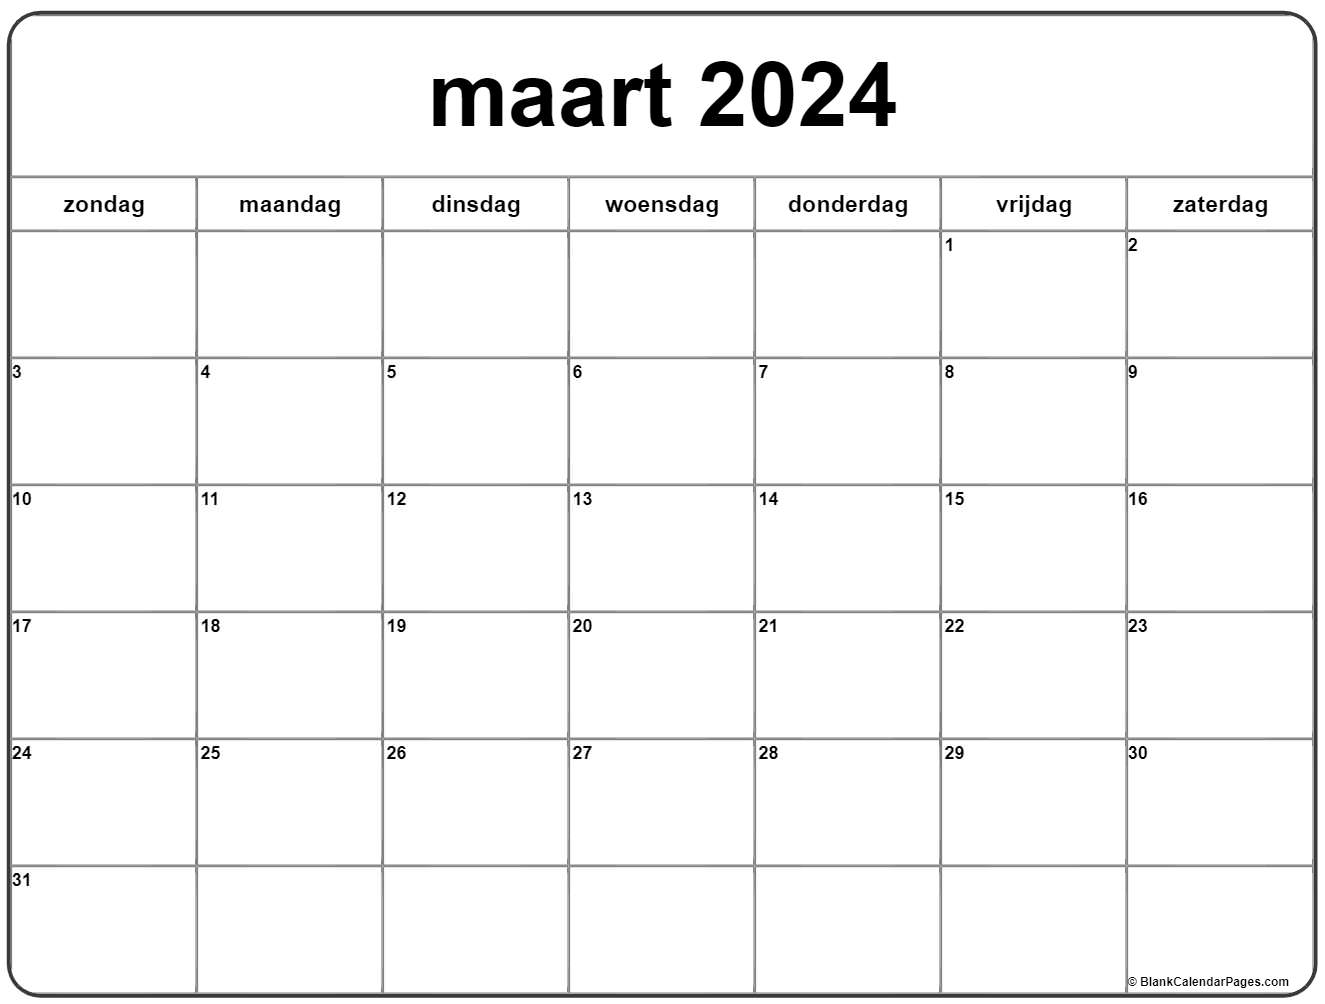 maart 2022 kalender.